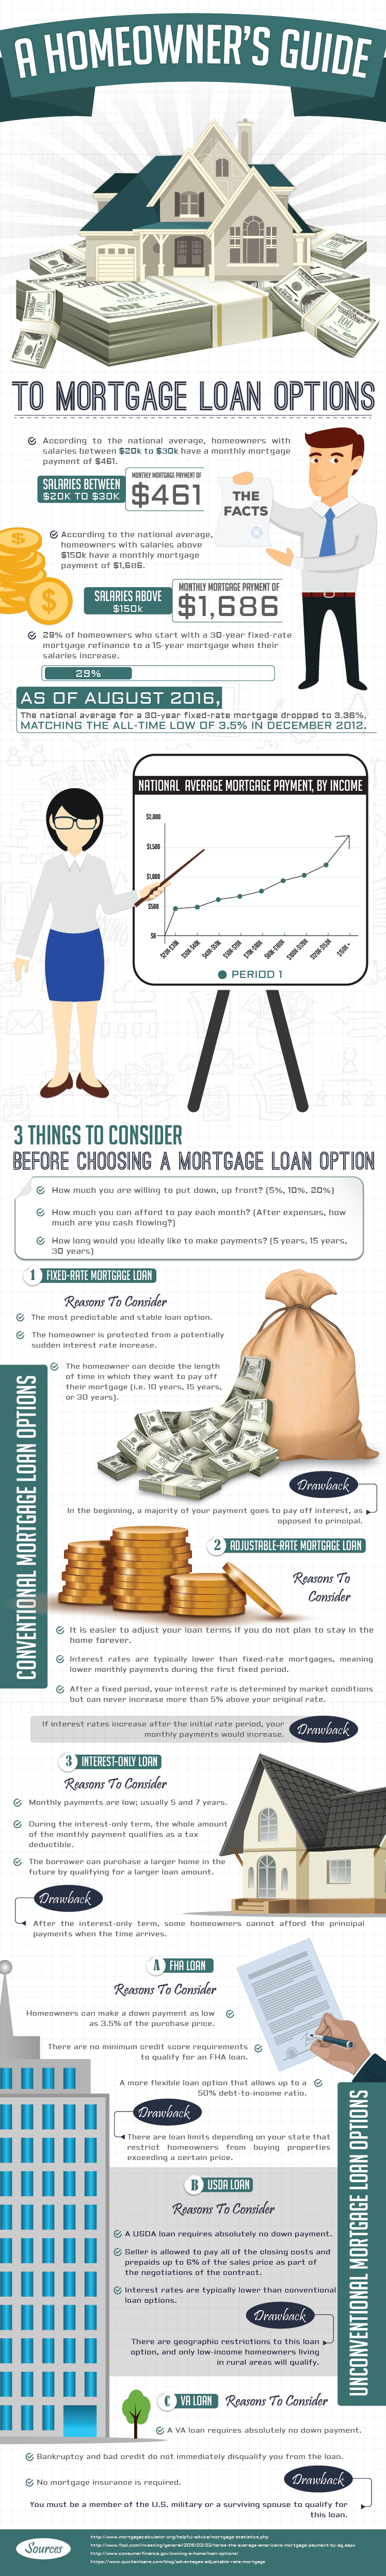 mortgage loan options